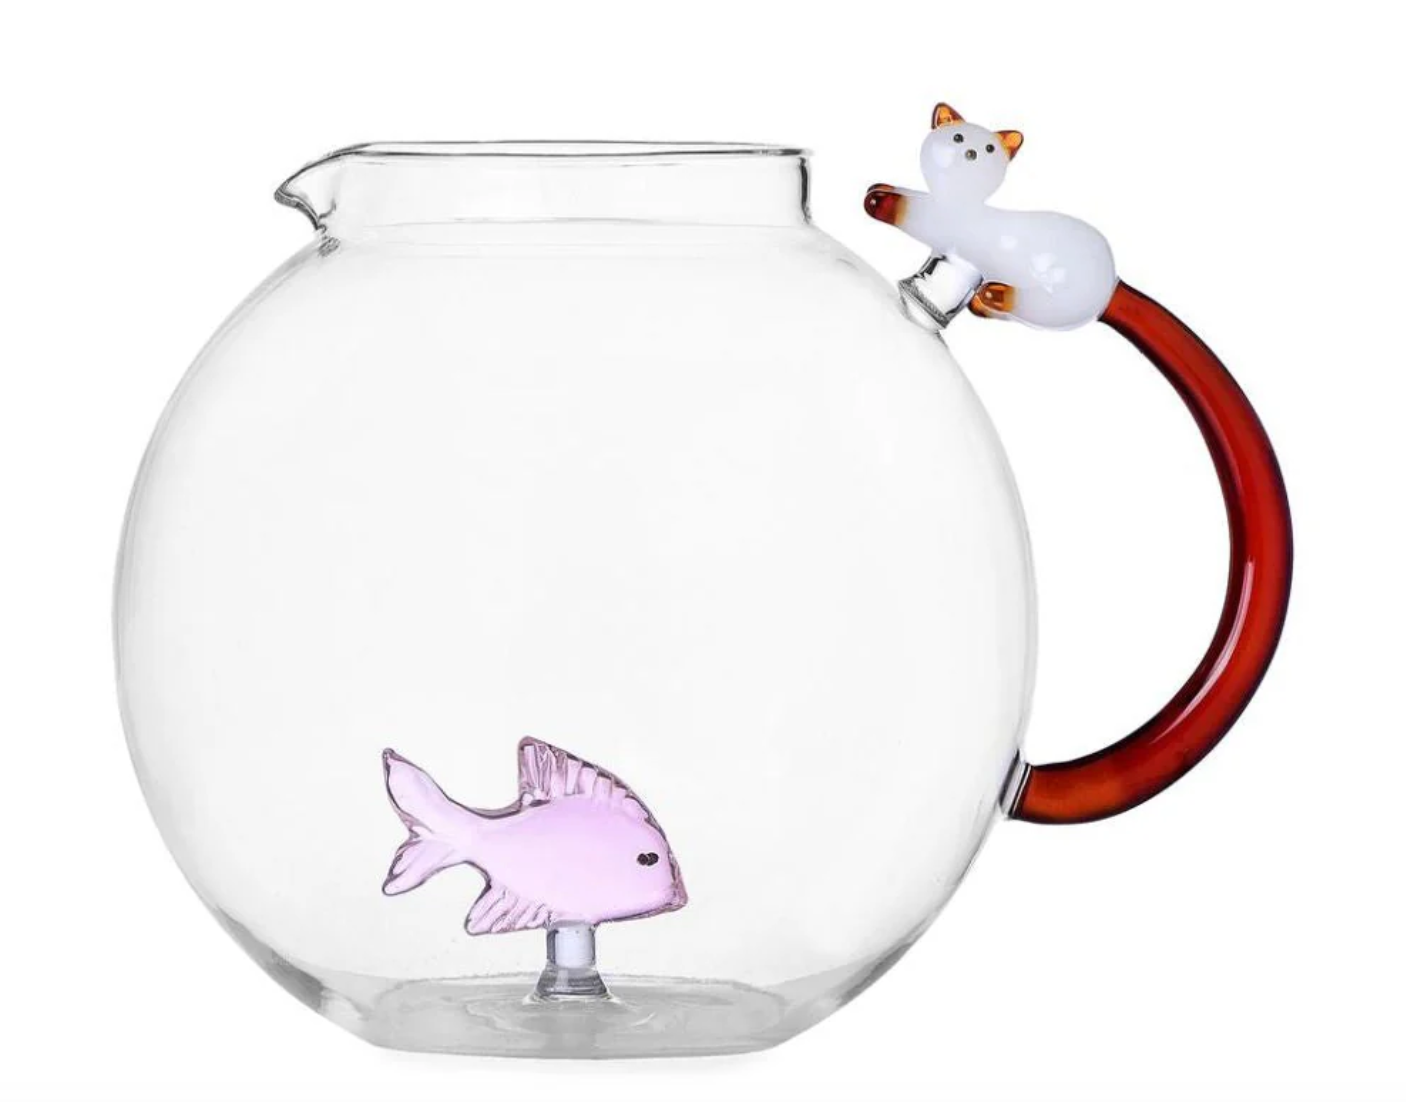 Pichet Tabby Cat - Jug Pink Fish & White Cat with Amber Tail - Ichendorf